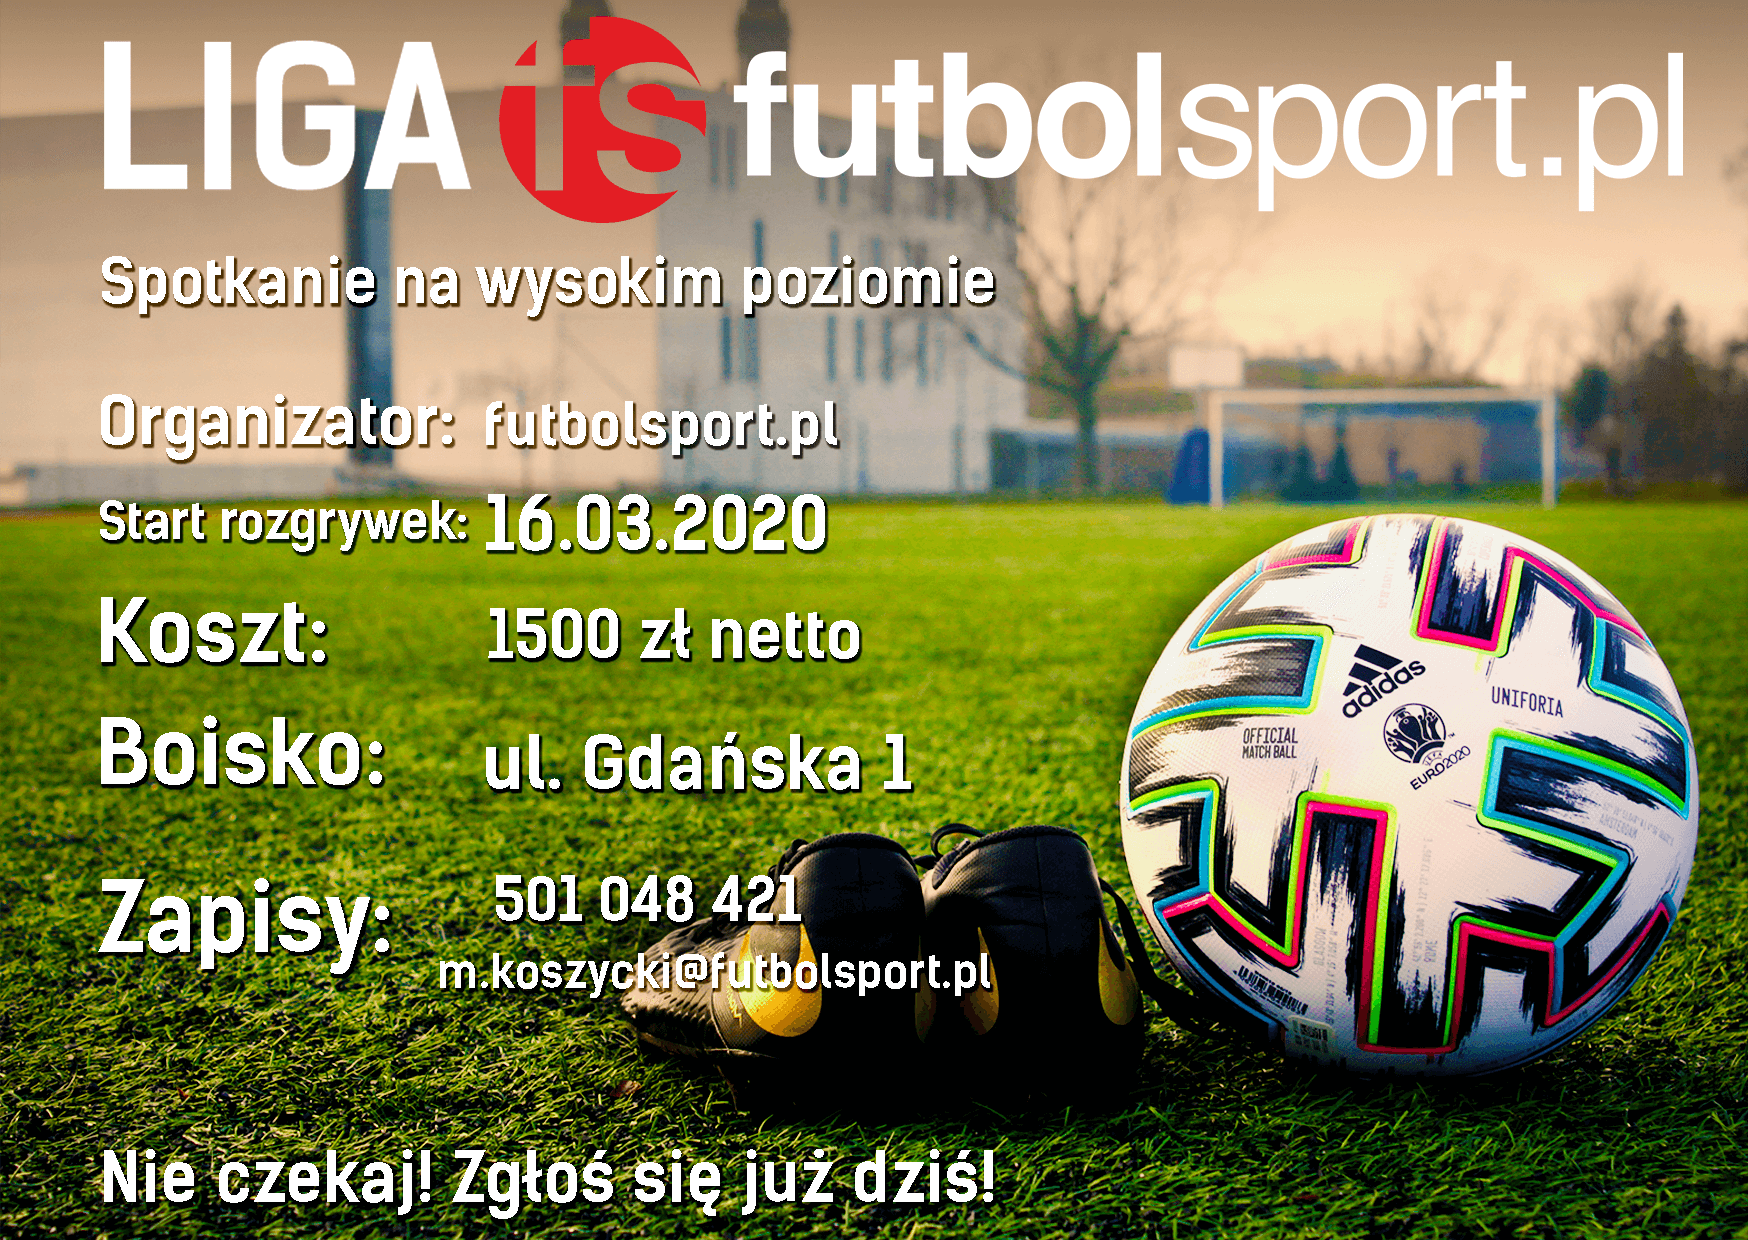 Start zapisów do Ligi futbolsport.pl - sezon Wiosna 2020